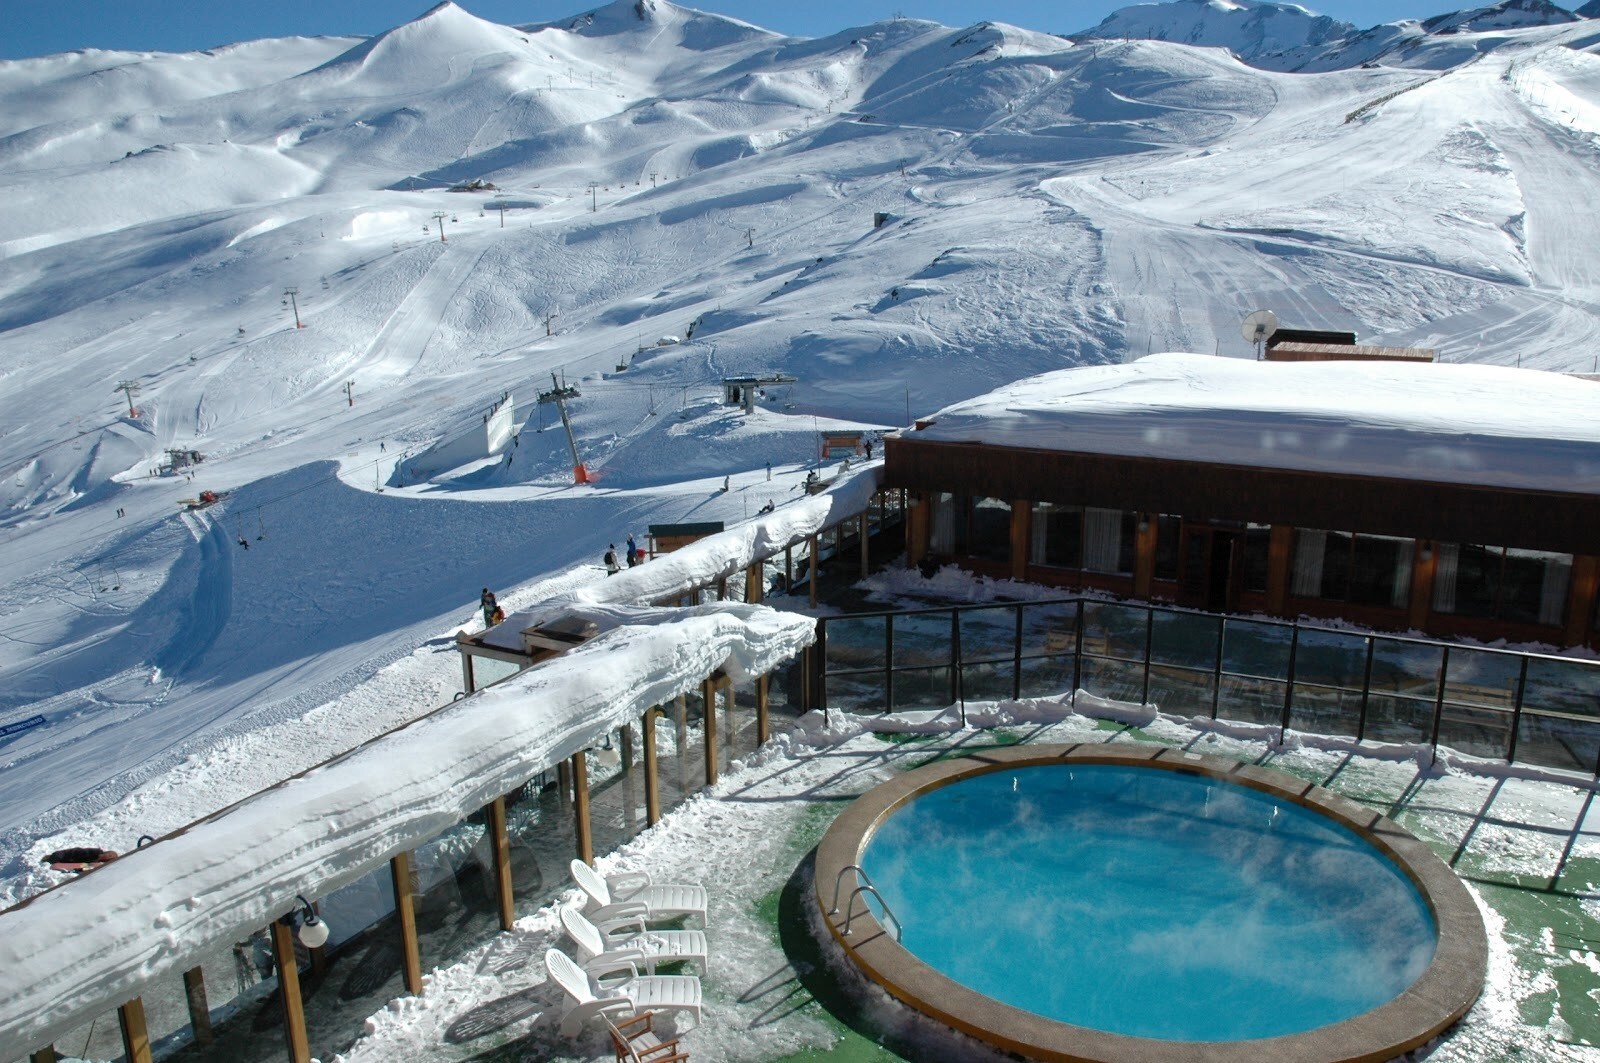 Vista da piscina aquecida do complexo Valle Nevado